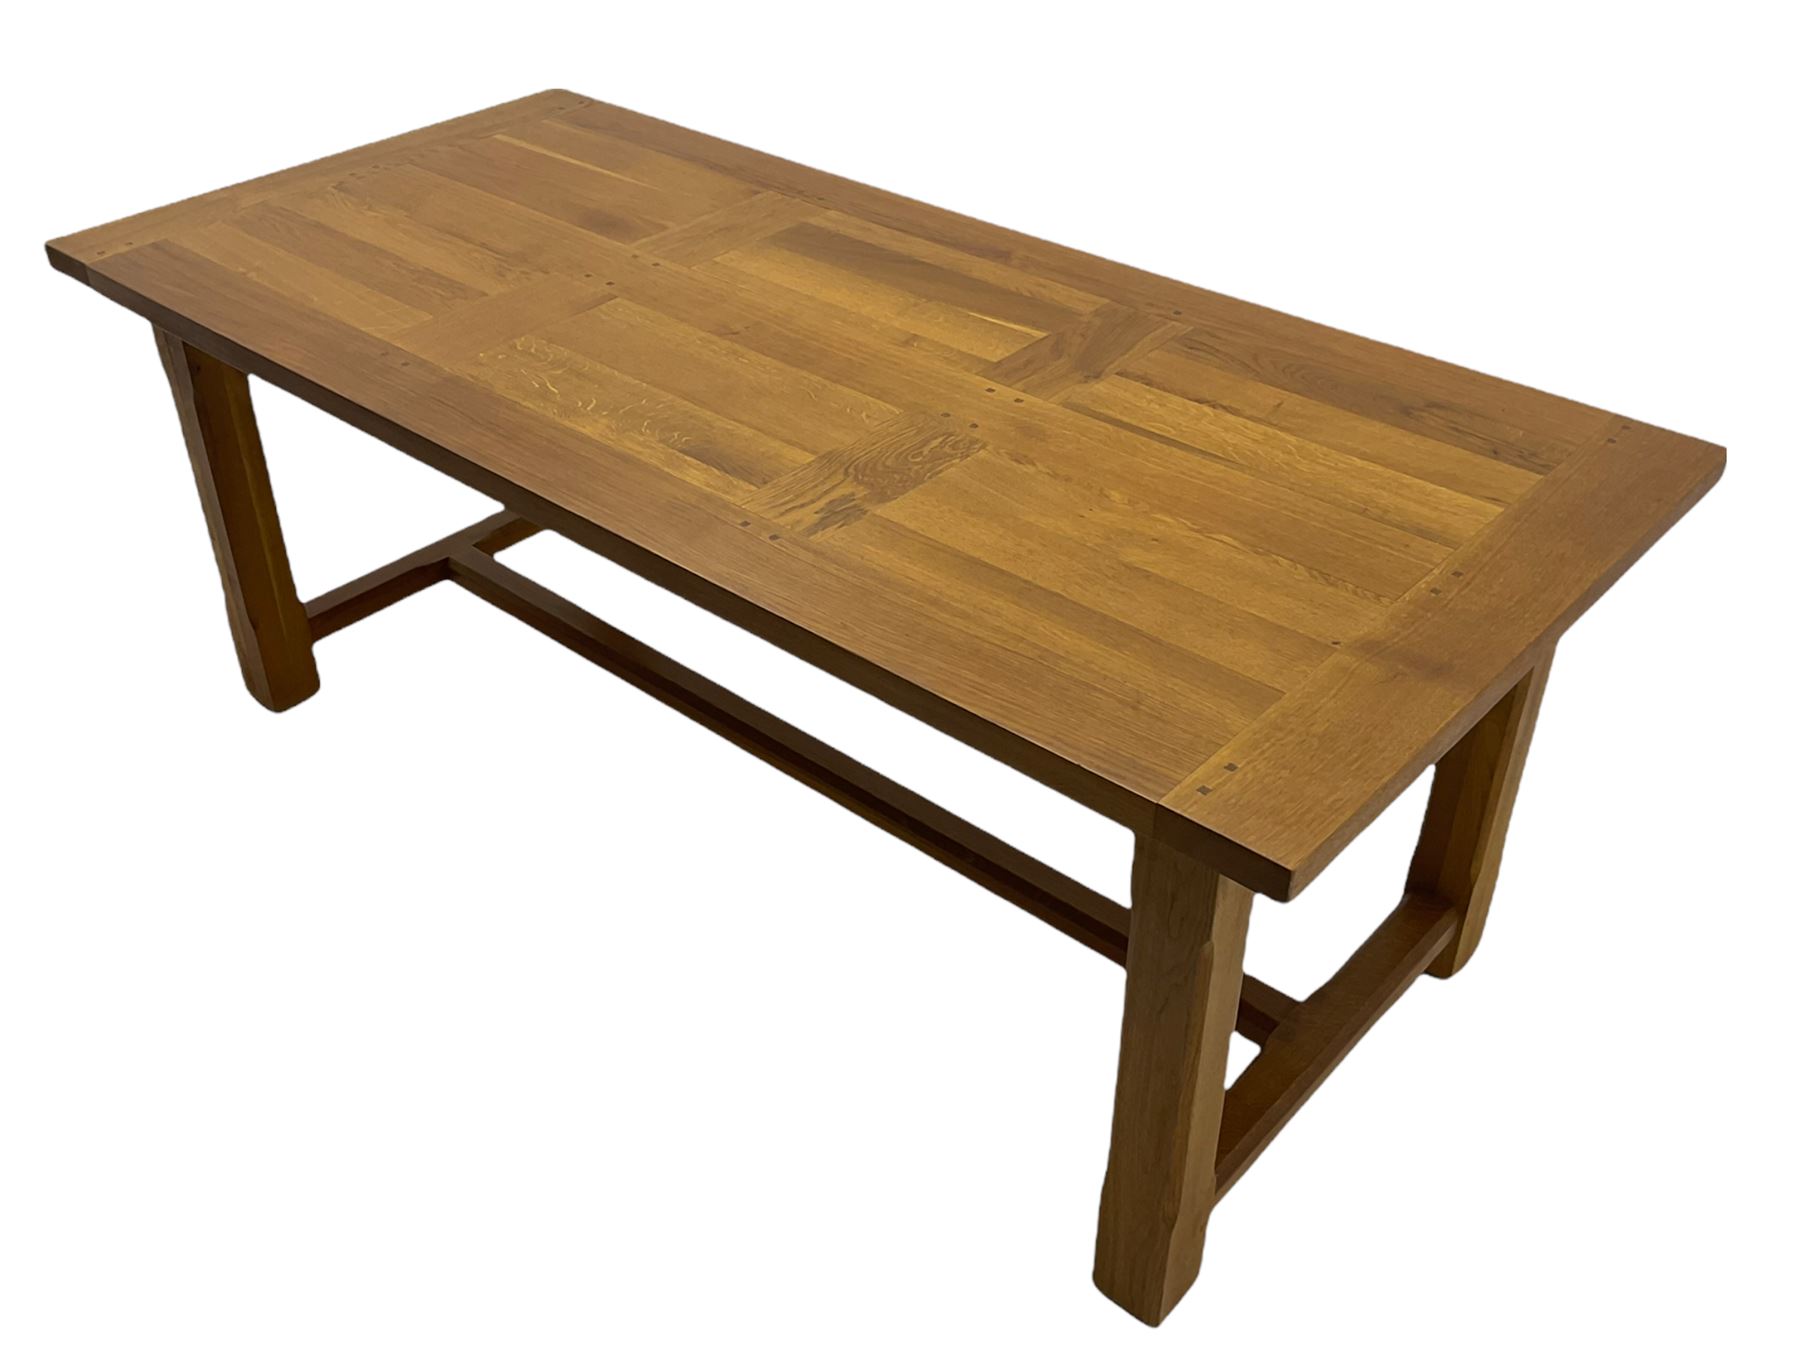 Manor Oak - light oak rectangular dining table - Image 5 of 11